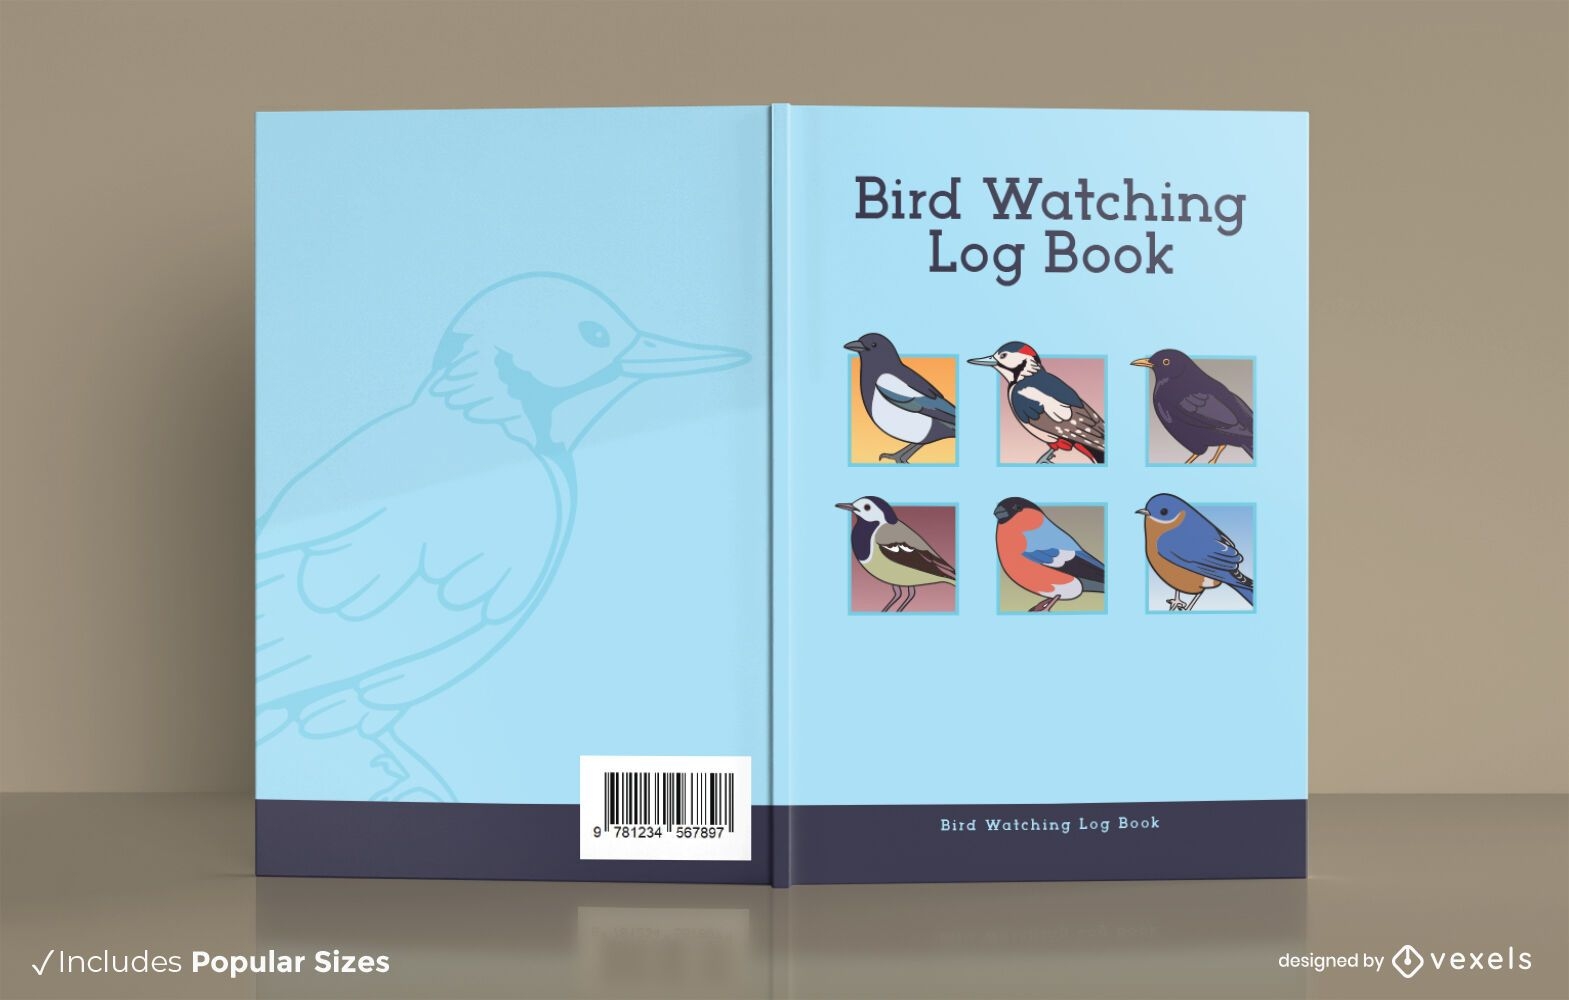 Design des Logbuch-Covers zur Vogelbeobachtung